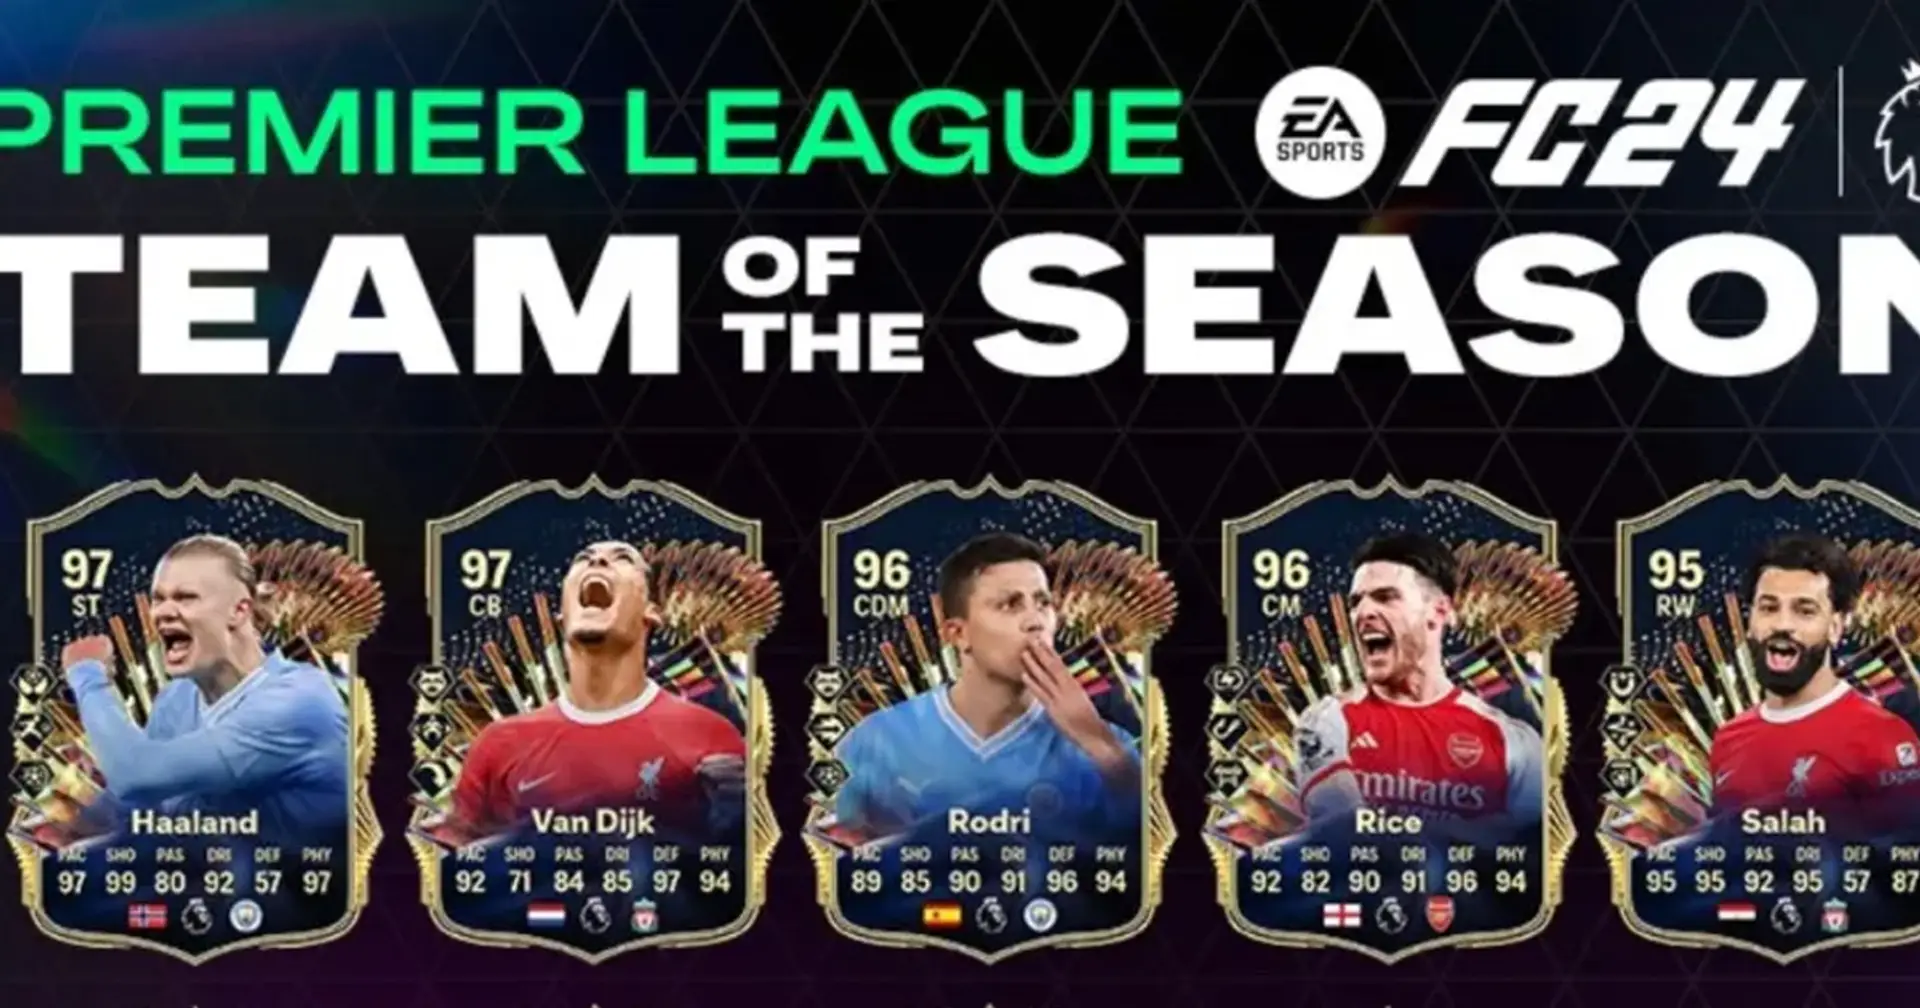 EA FC 24 Premier League Team of the Season revealed